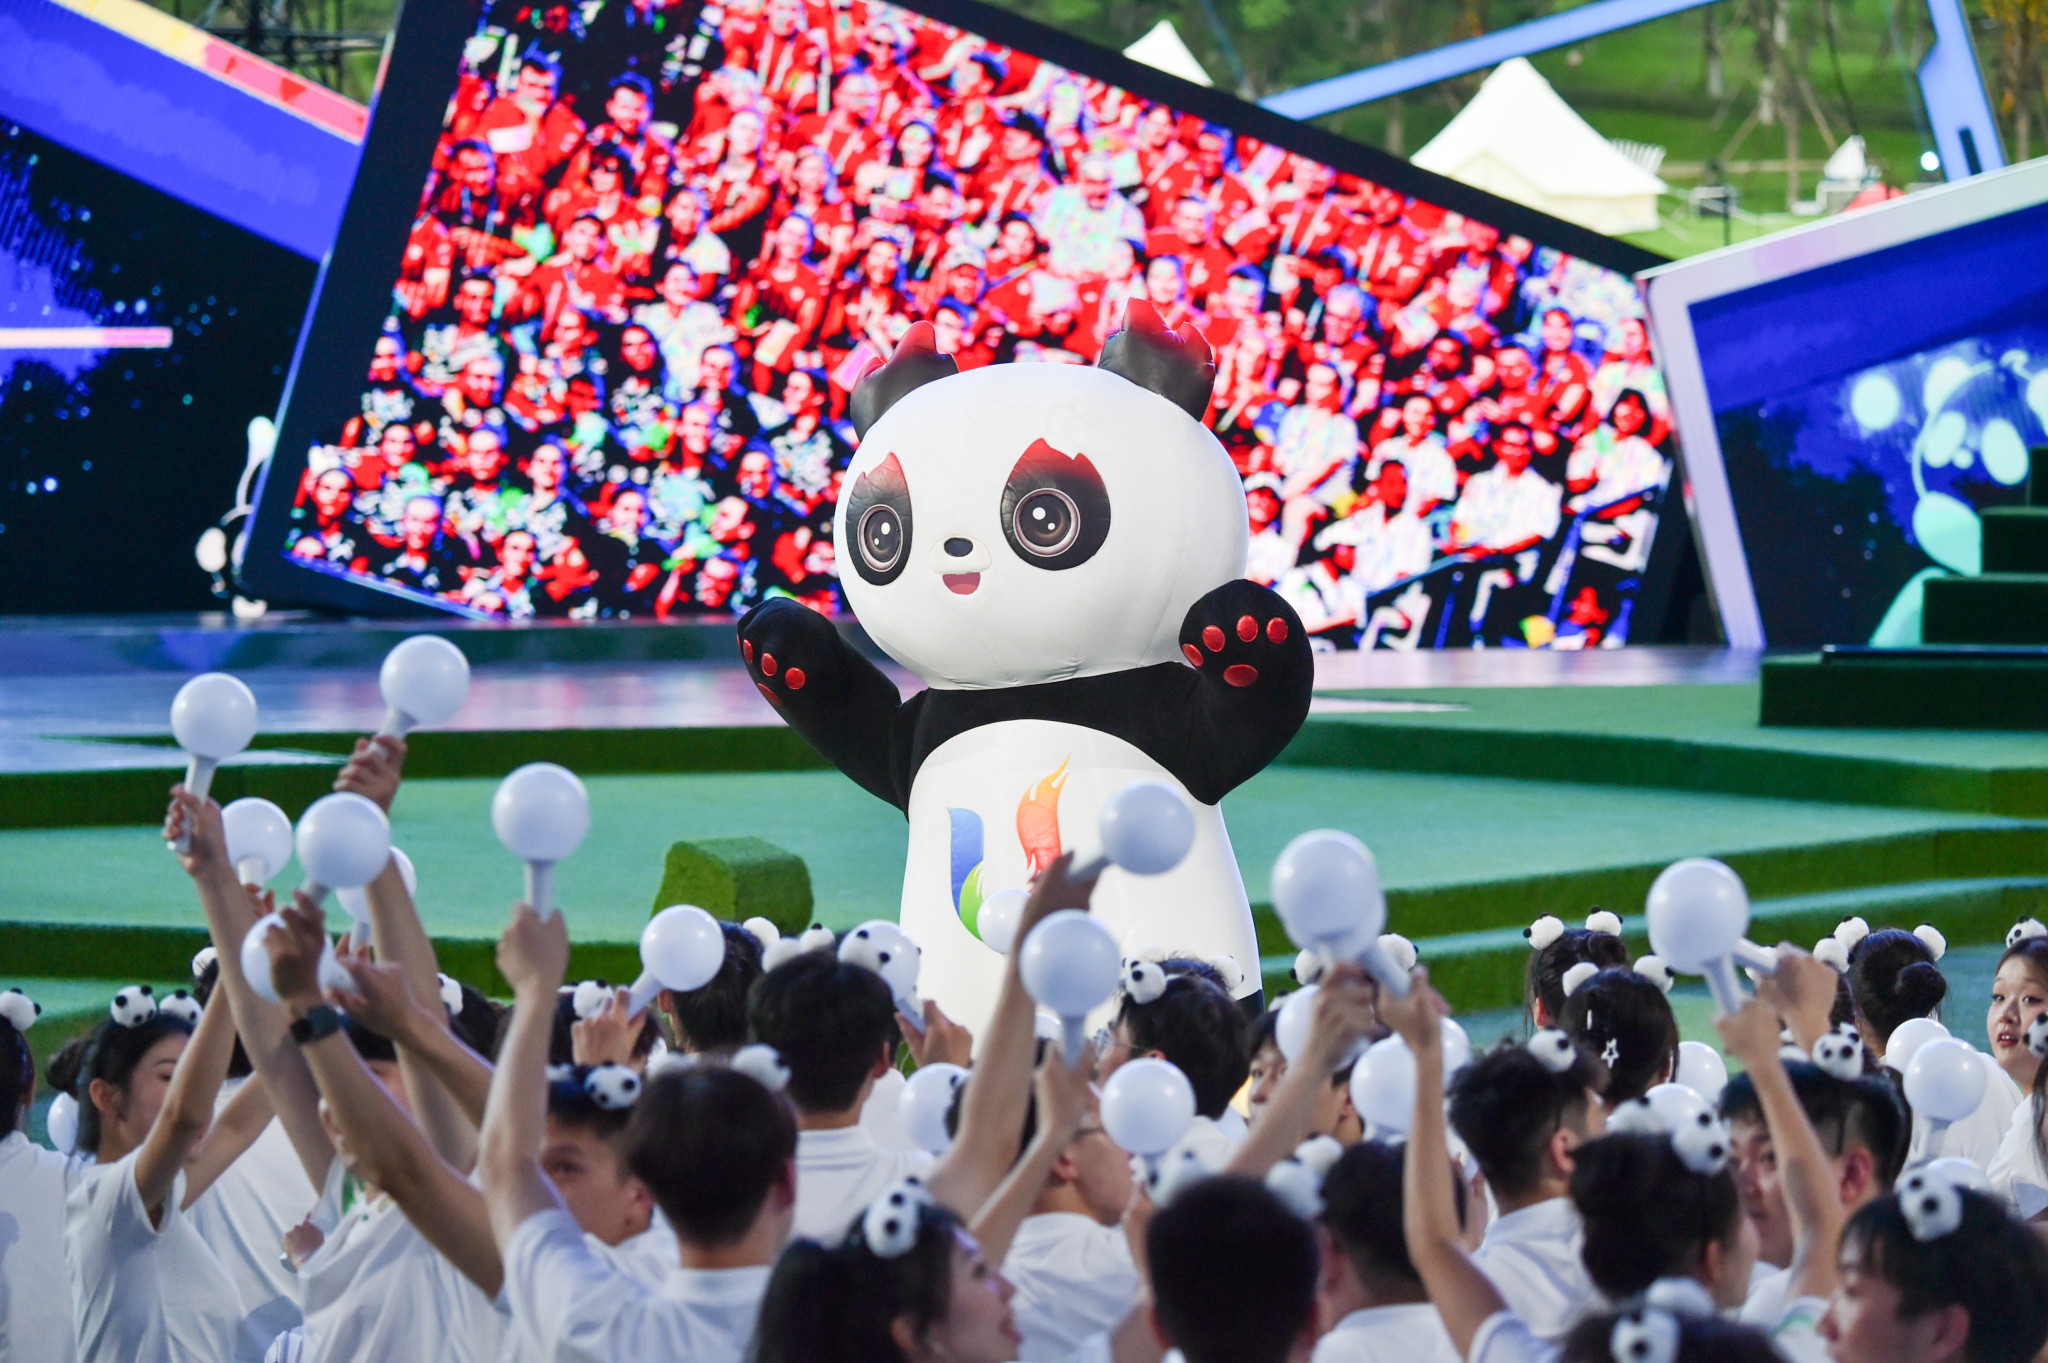 Chengdu 2021 mascot Rongbao performs prior to the Closing Ceremony ©FISU